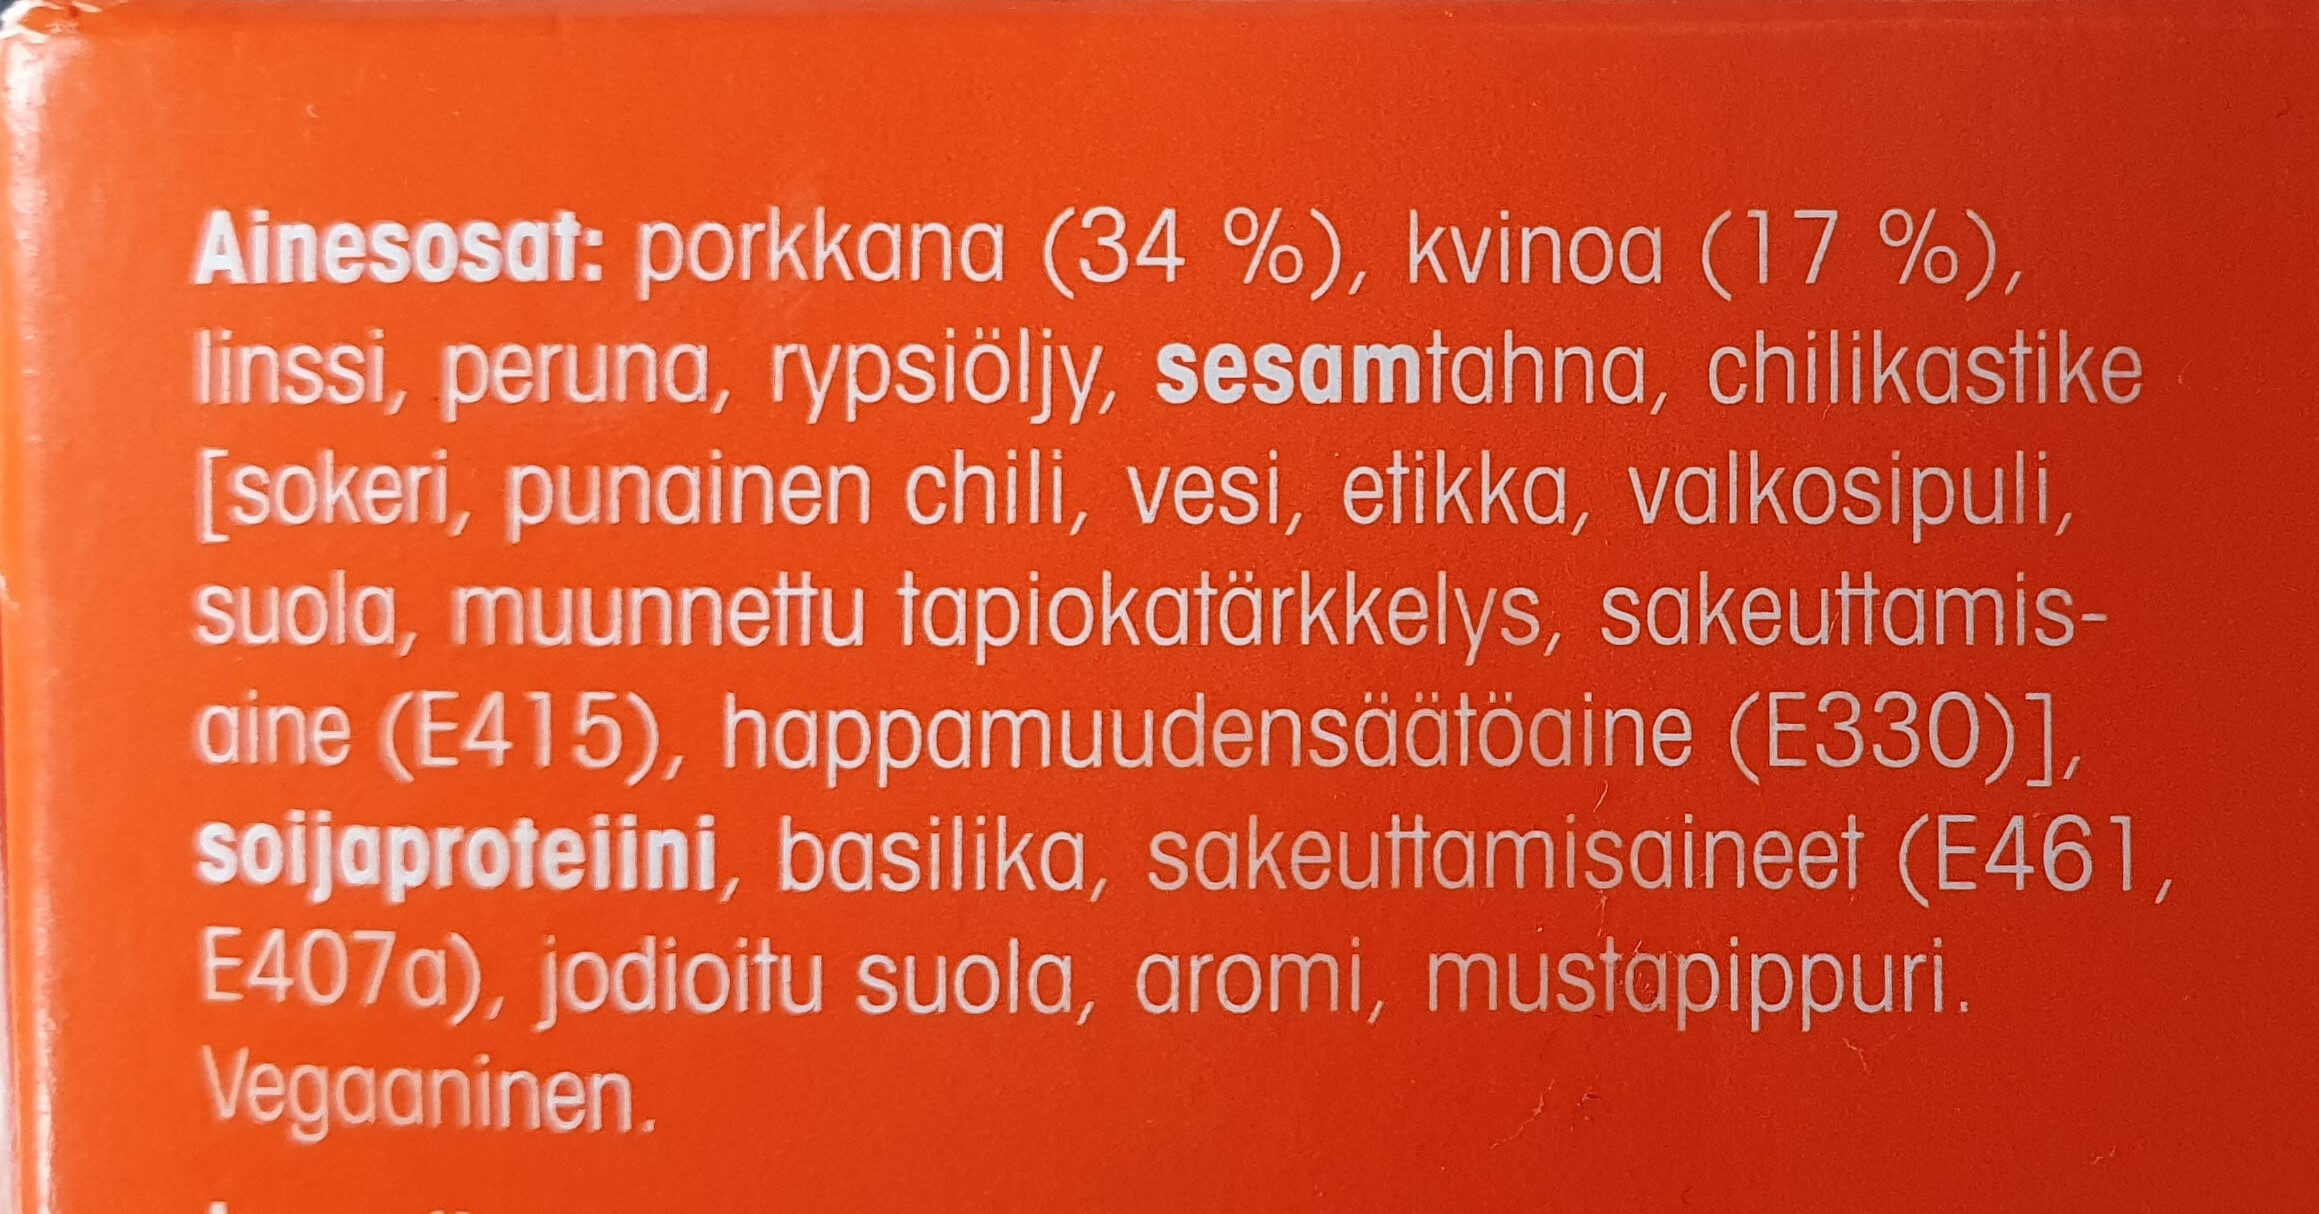 Porkkana-Kvinoapihvi - Ainesosat